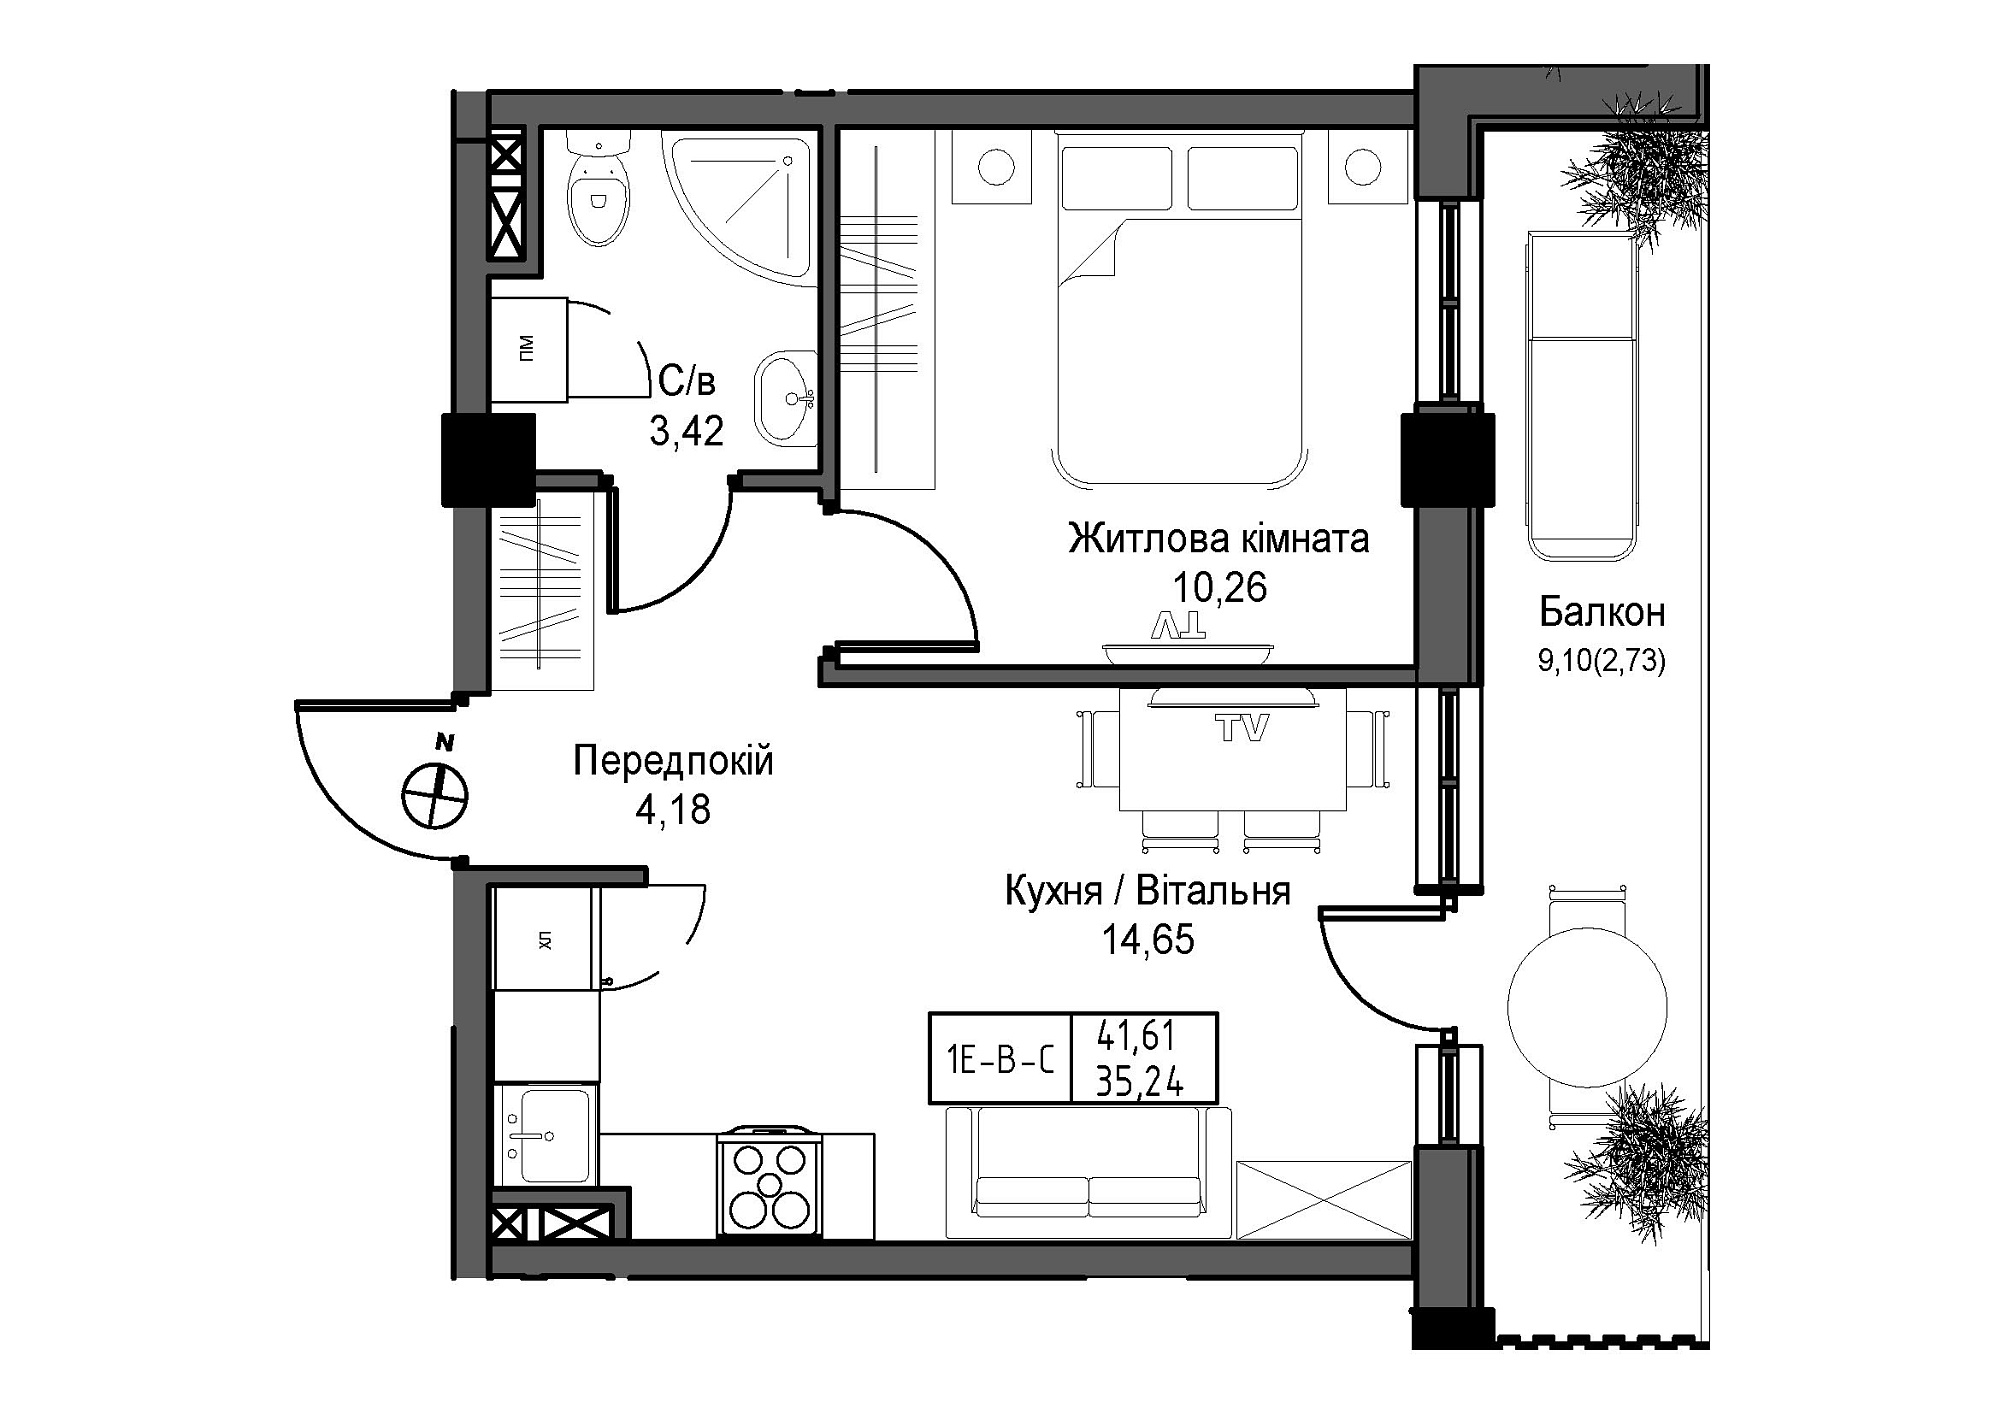 Планування 1-к квартира площею 35.24м2, UM-007-07/0004.